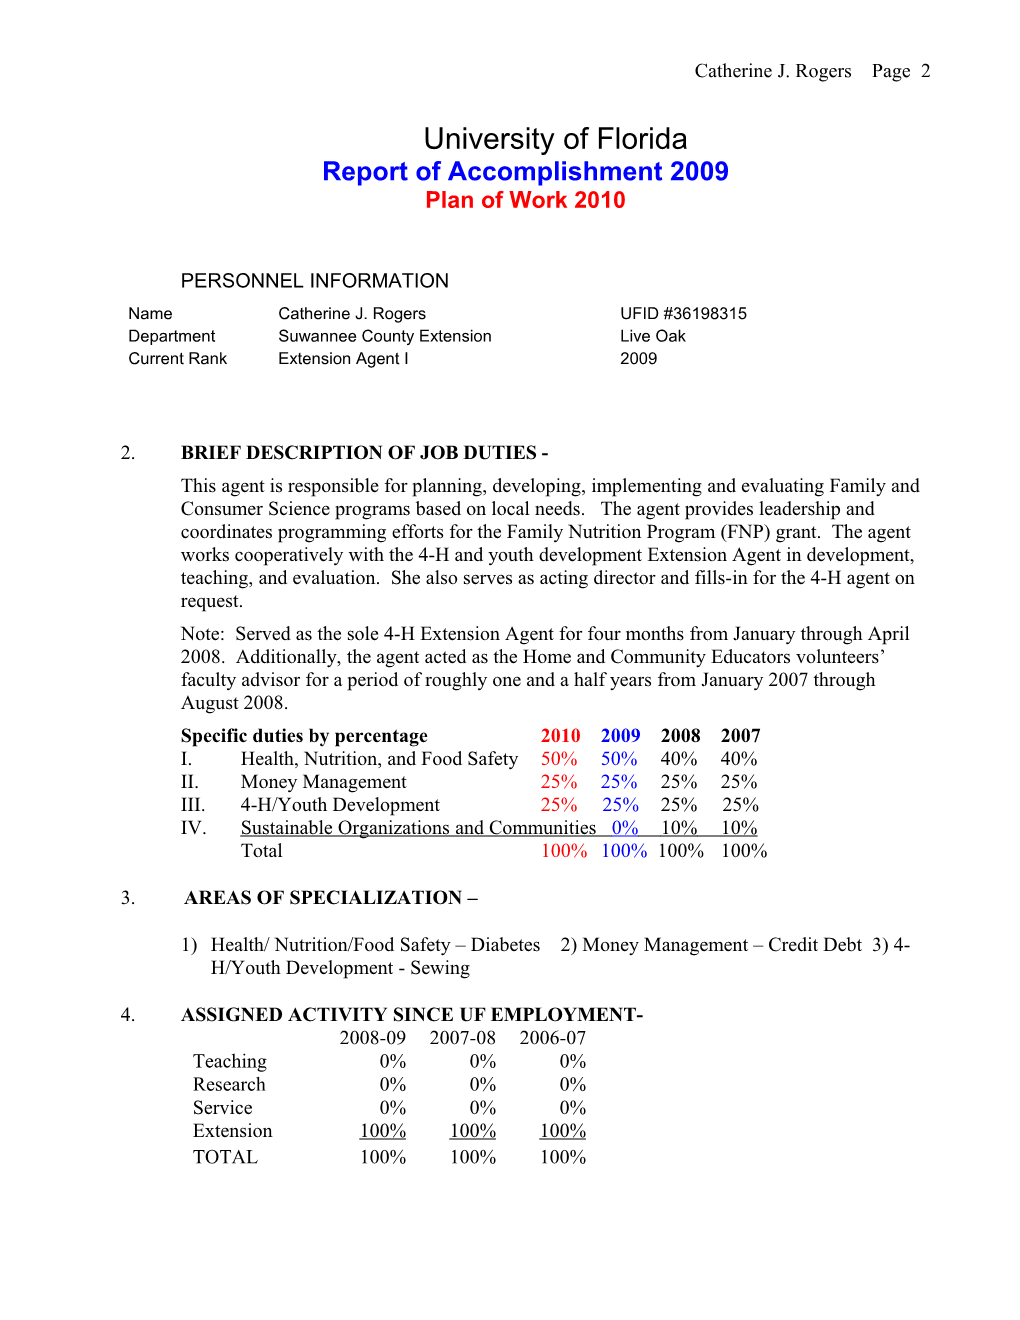 University of Florida Report of Accomplishment 2009